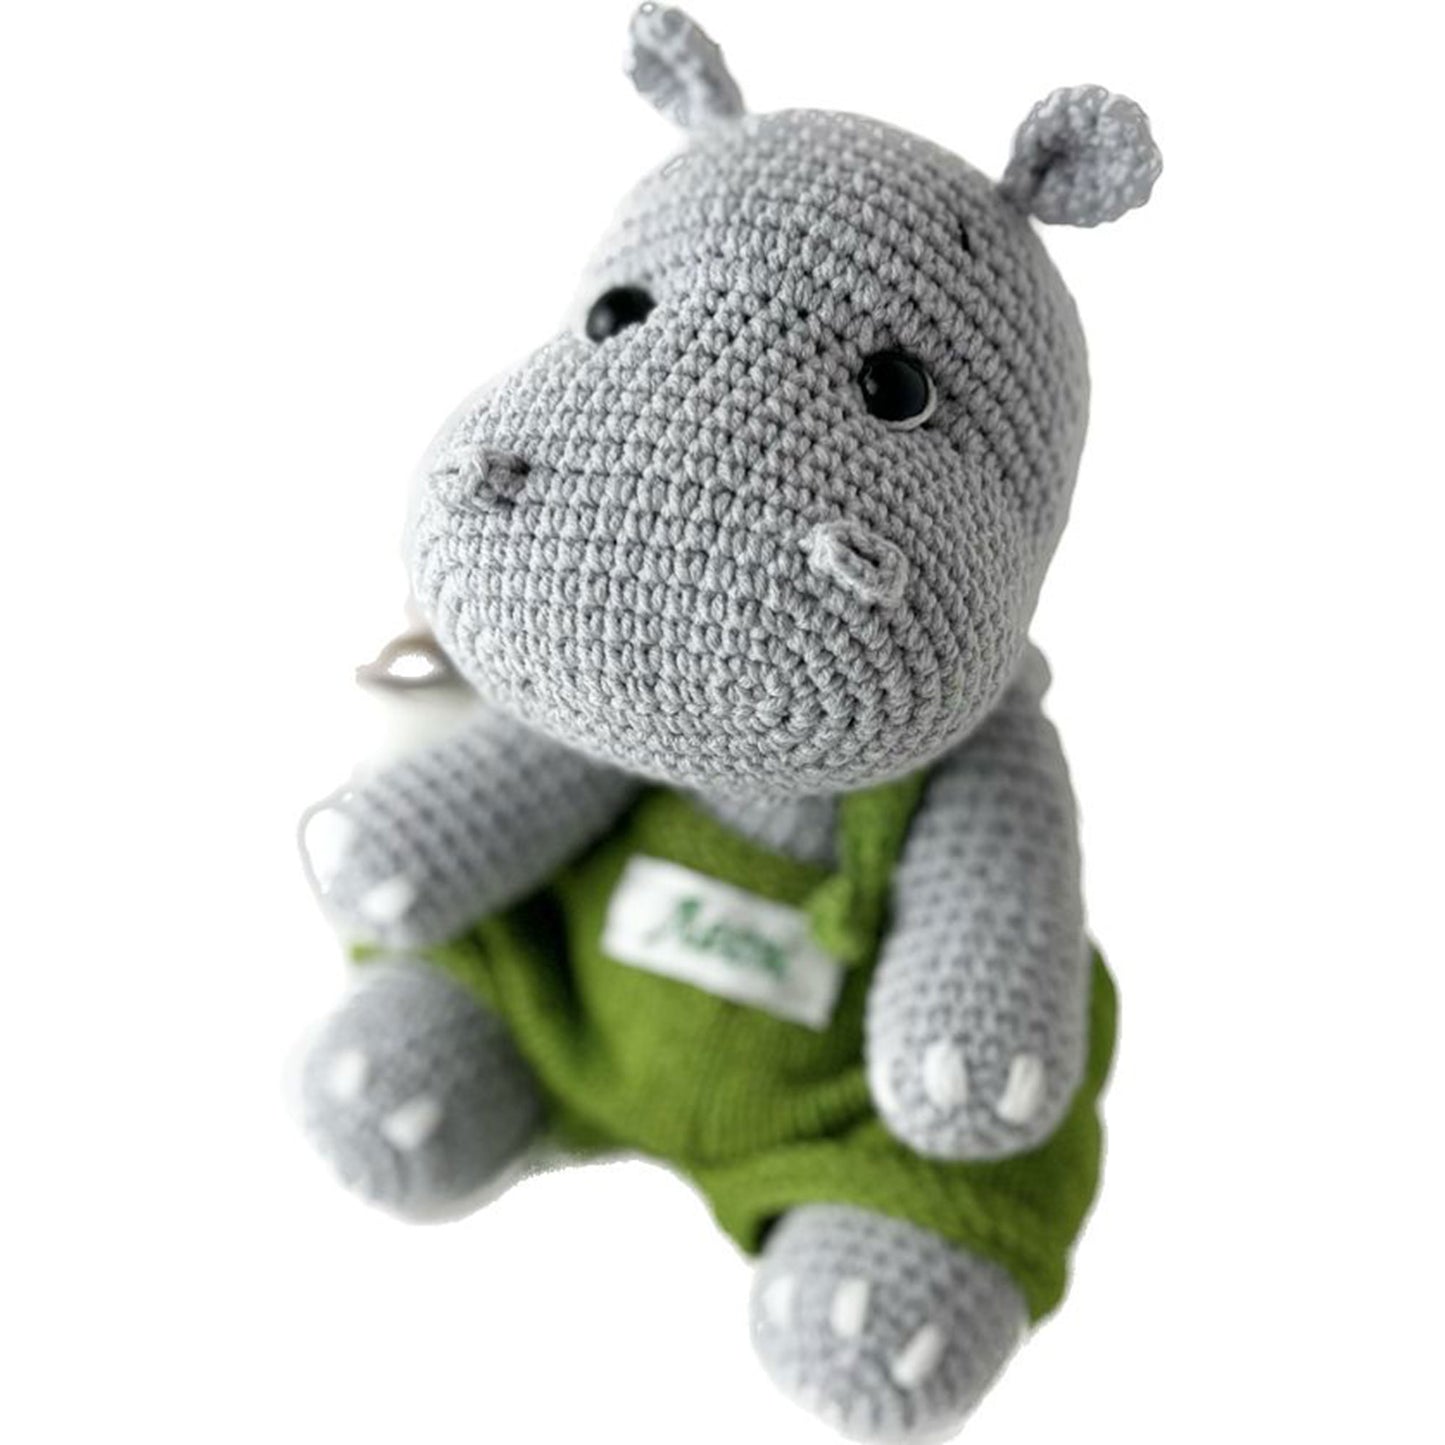 Hippo Lulibears Crochet Teddy Bears. Handmade stuffed animal, puppy, knit by hand.